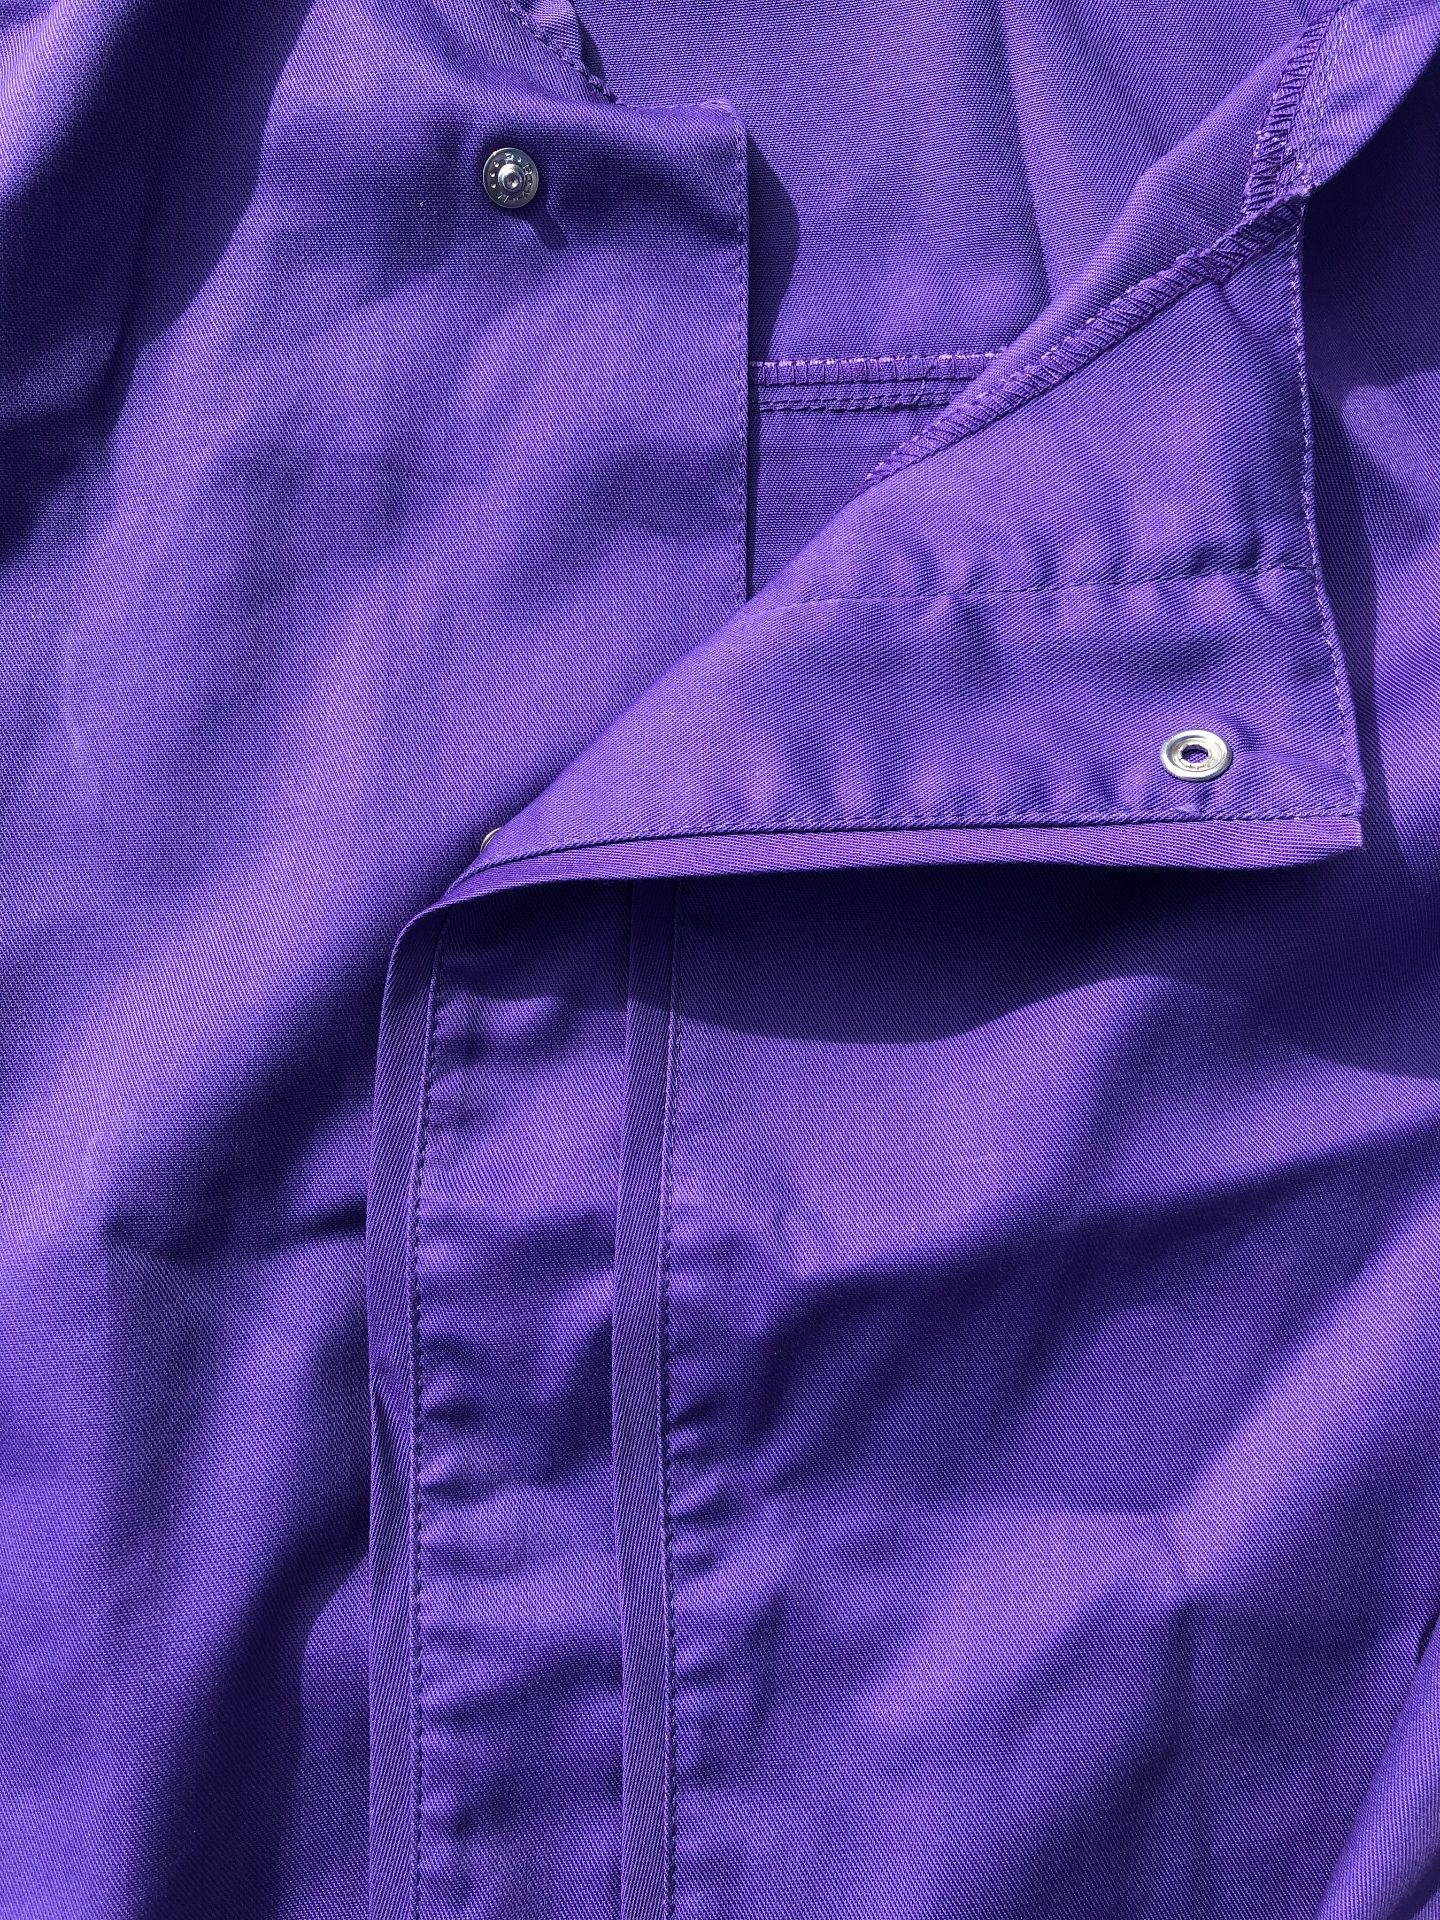 Brand new long sleeve chef jacket - MEDIUM x 12 - Image 2 of 3